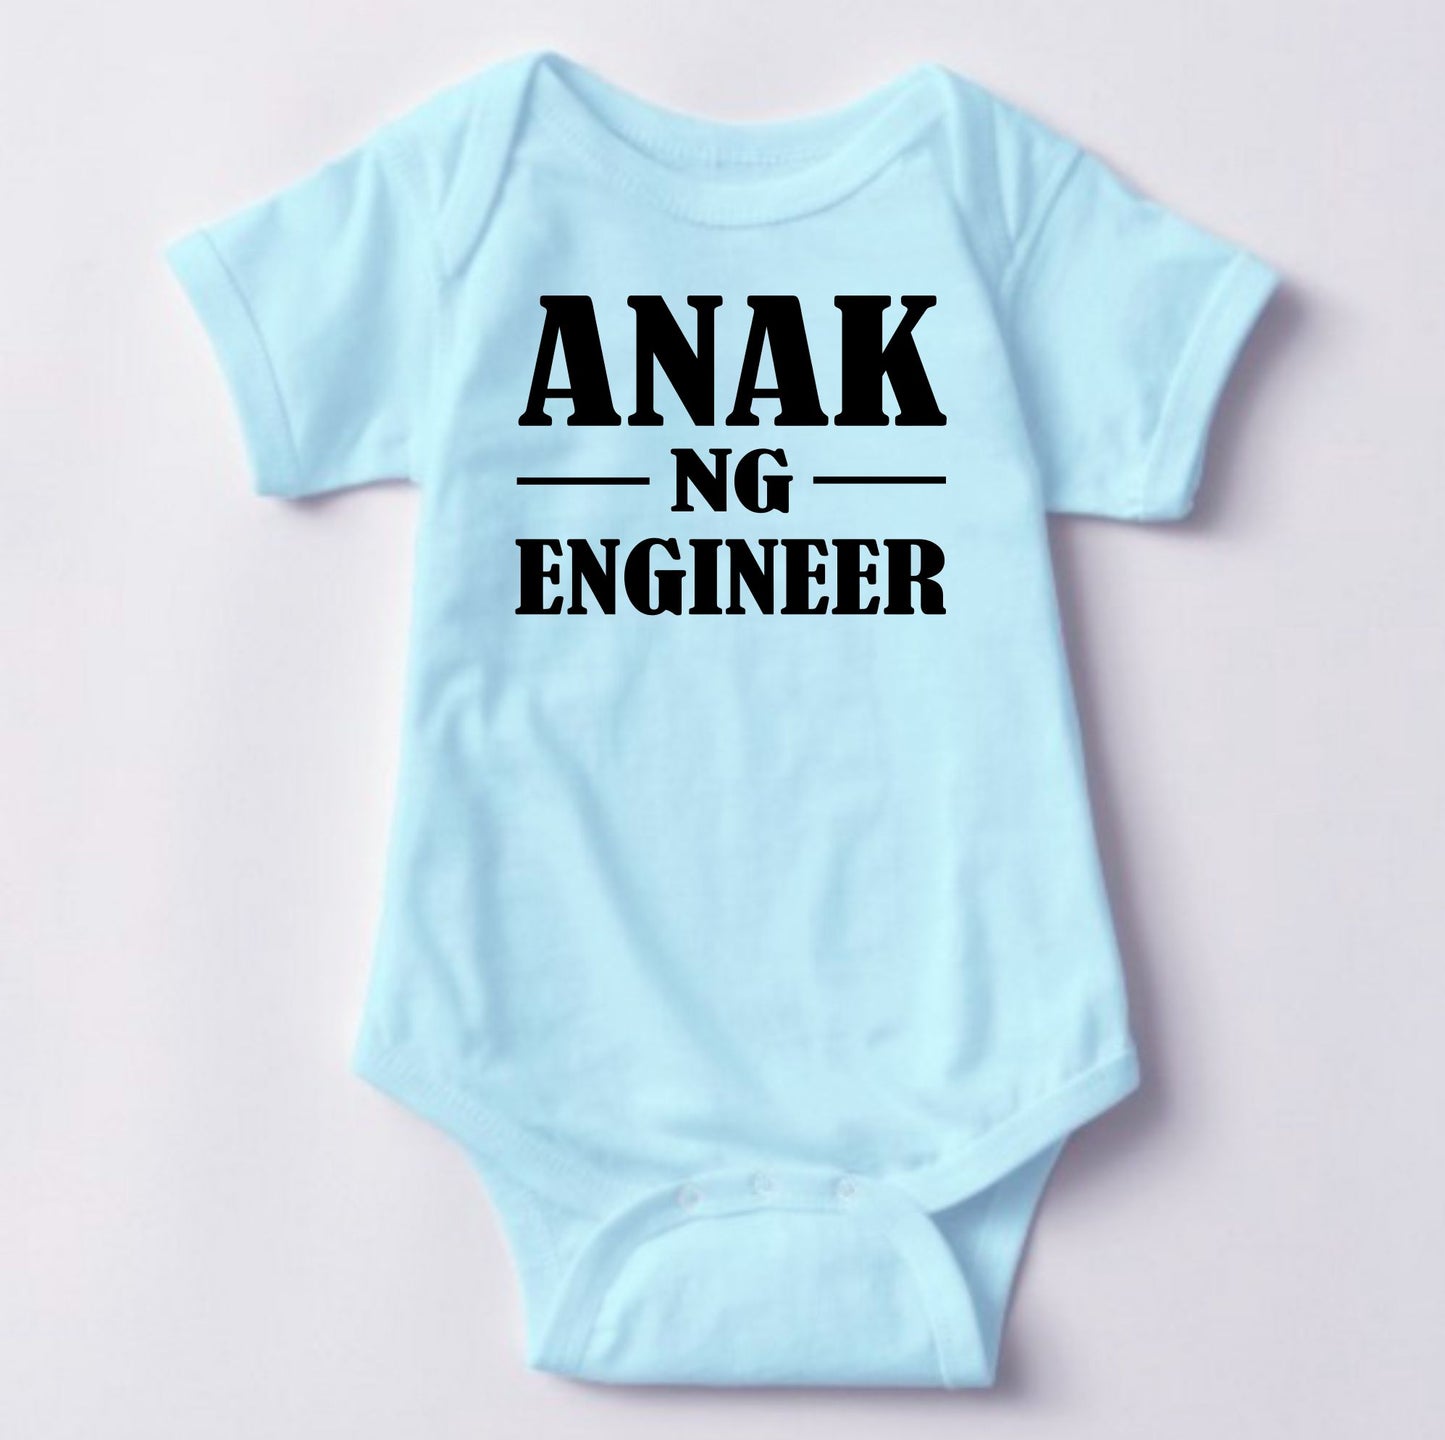 Baby Statement Onesies - Anak ng Engineer